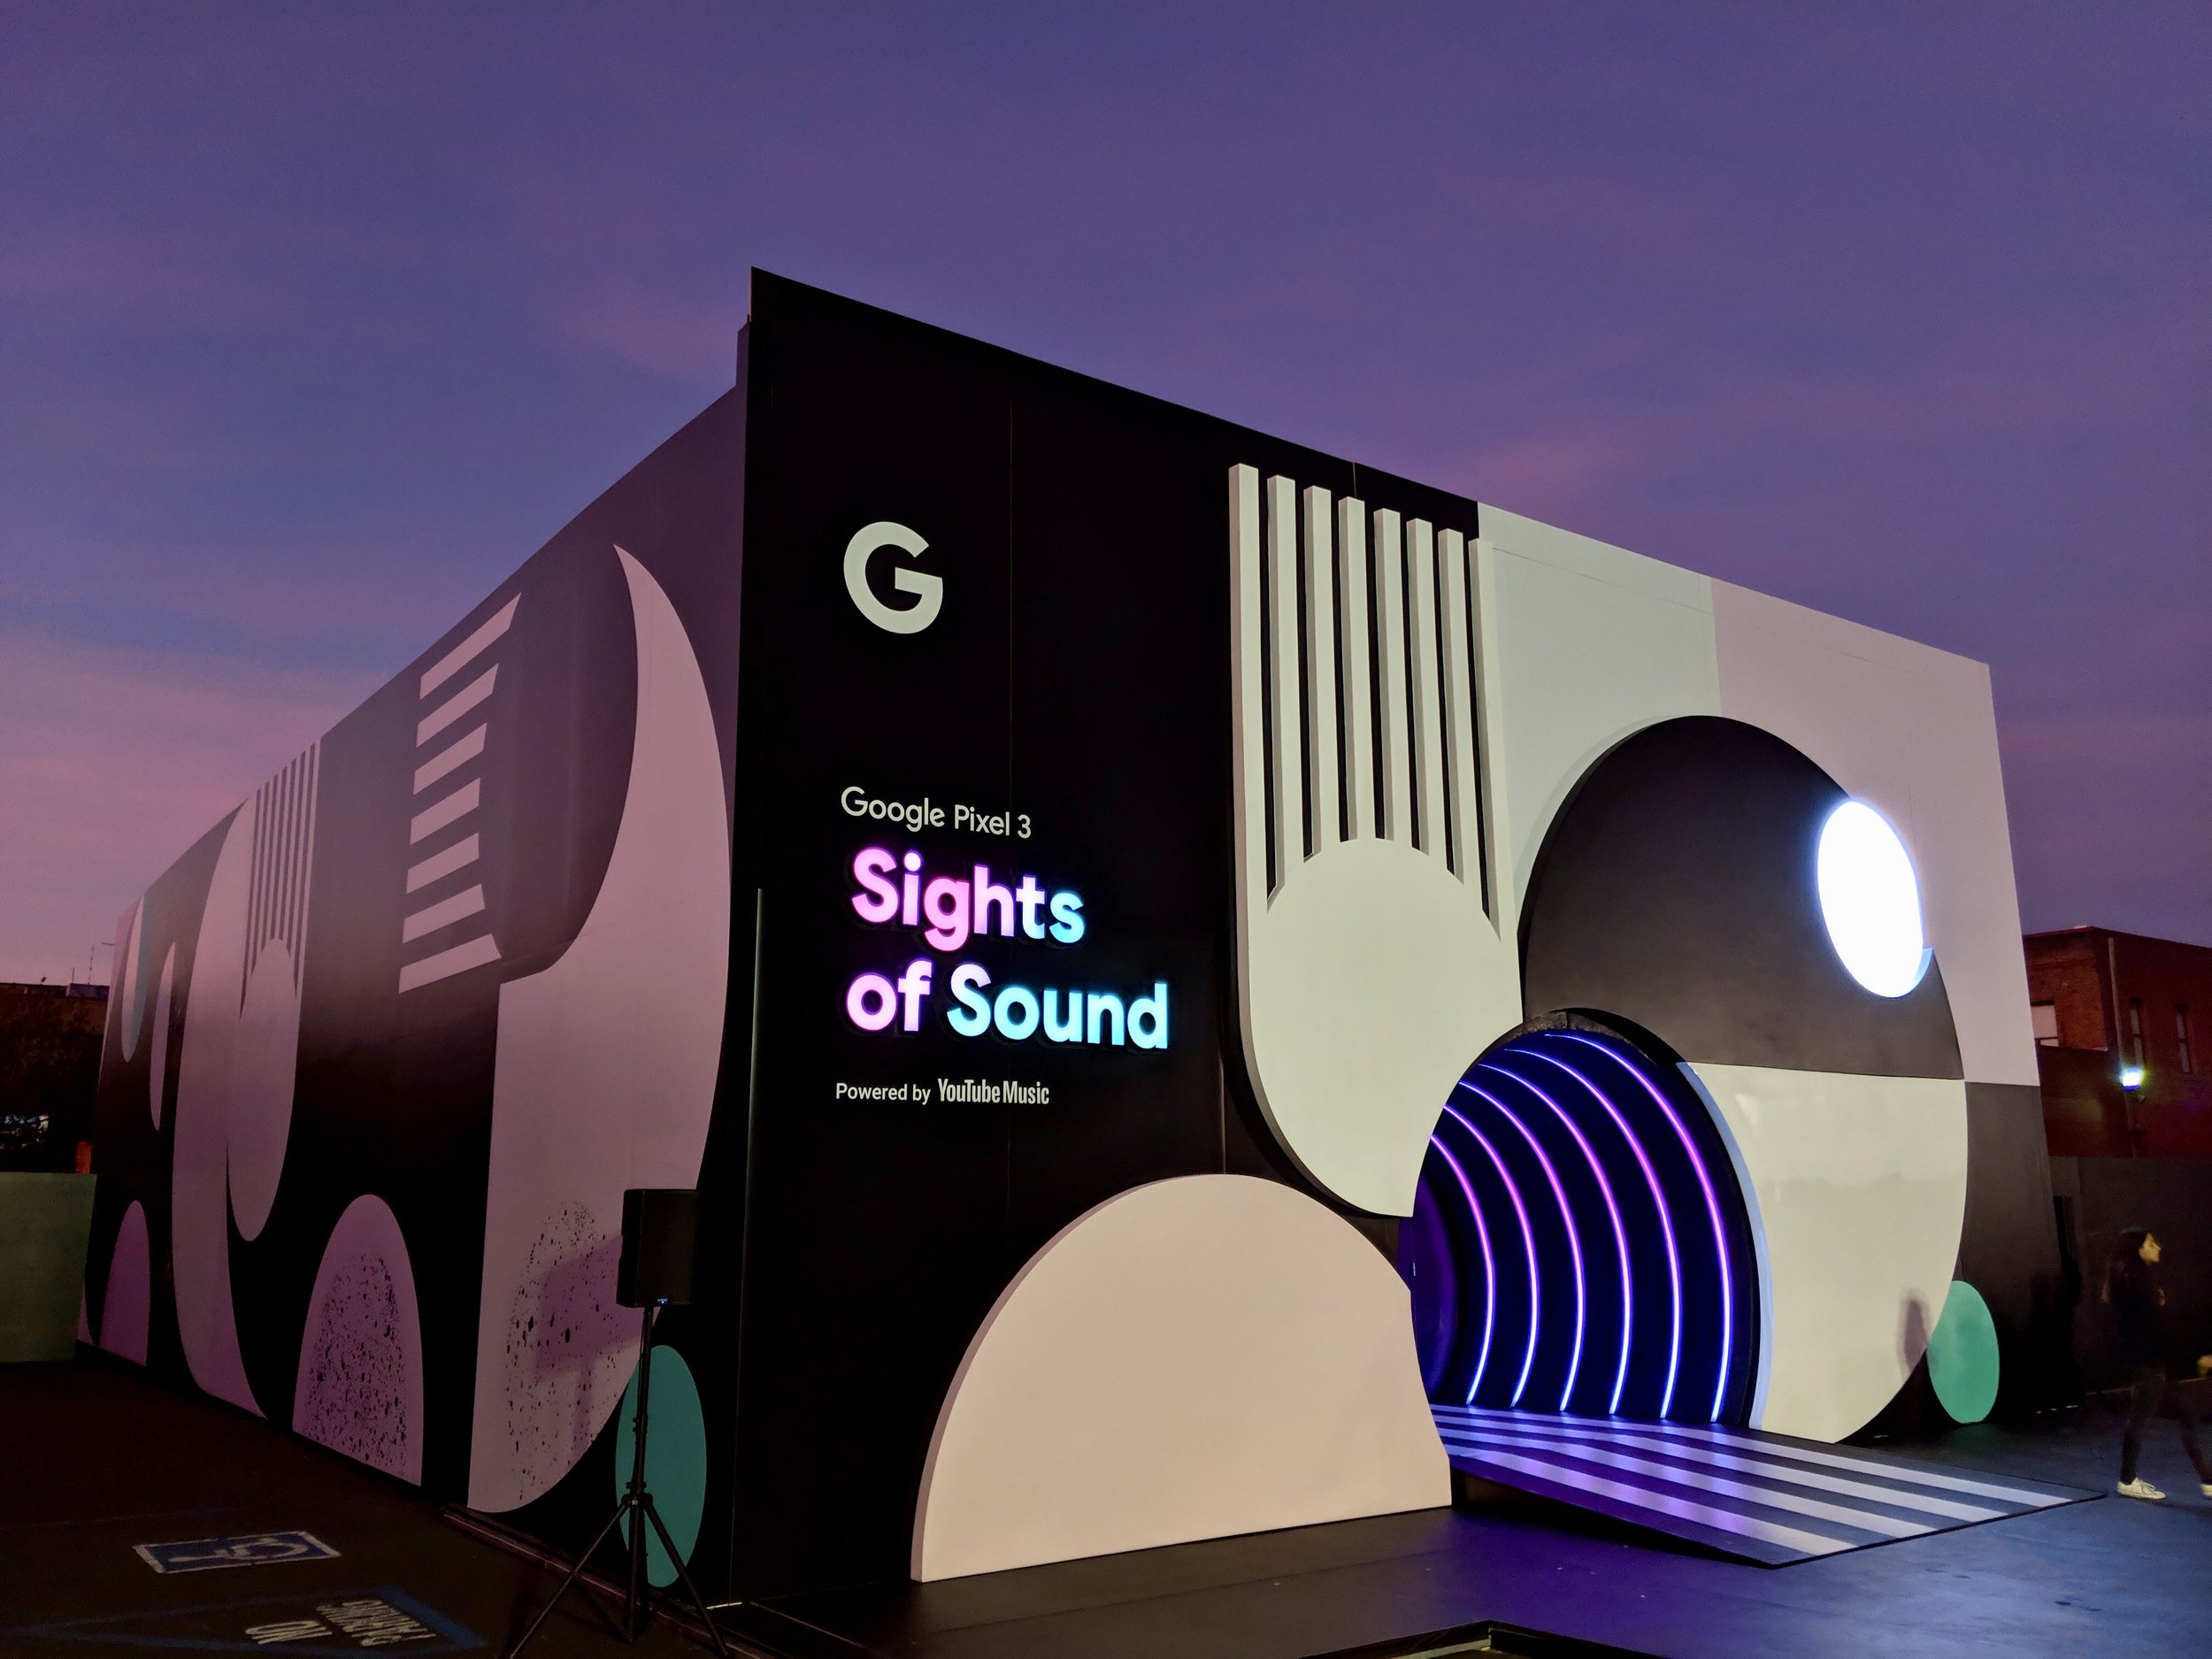 Google Pixel 3 Sights of Sound